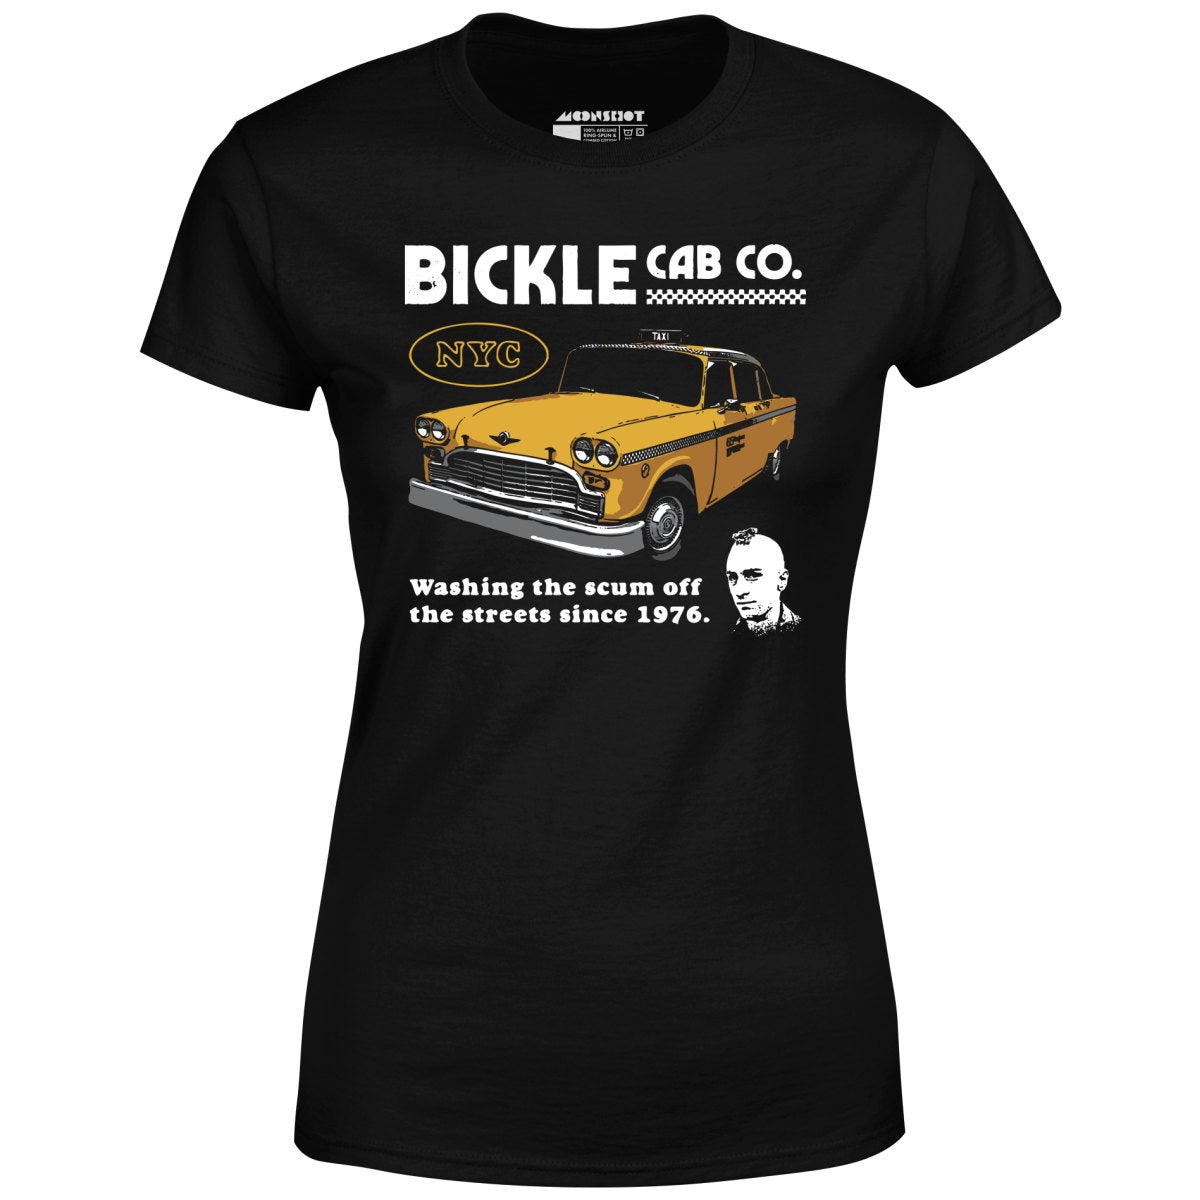 Bickle Cab Co. - Women's T-Shirt